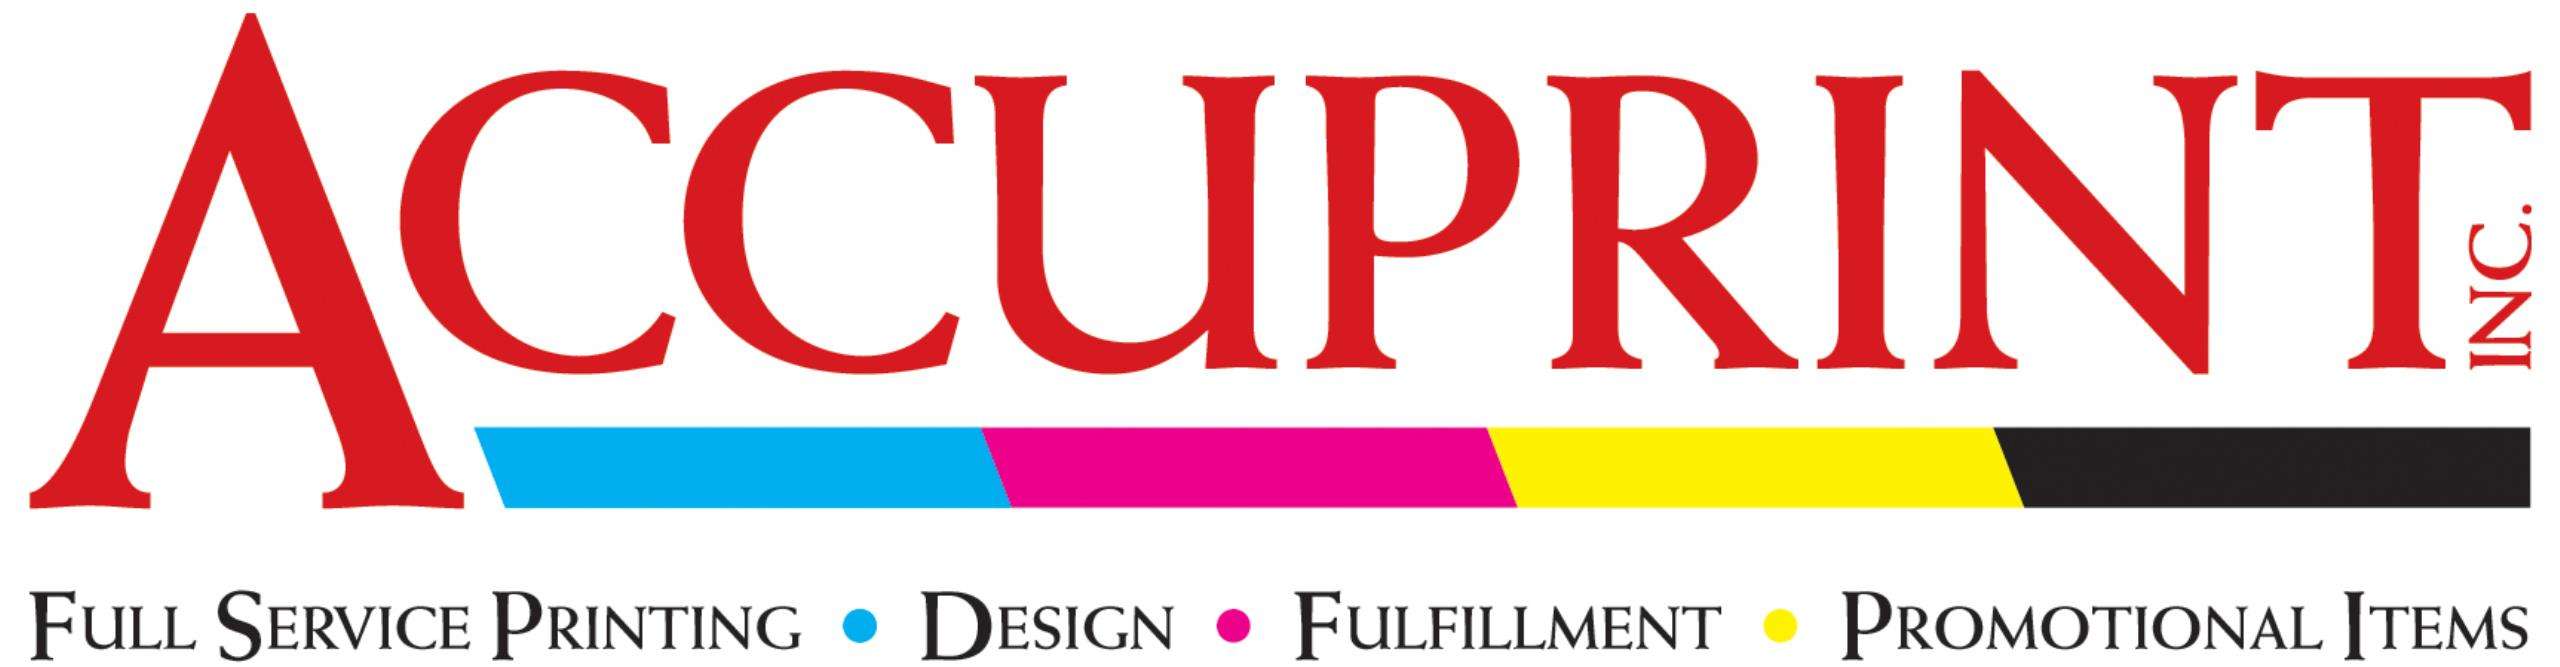 Accuprint, Inc. Logo